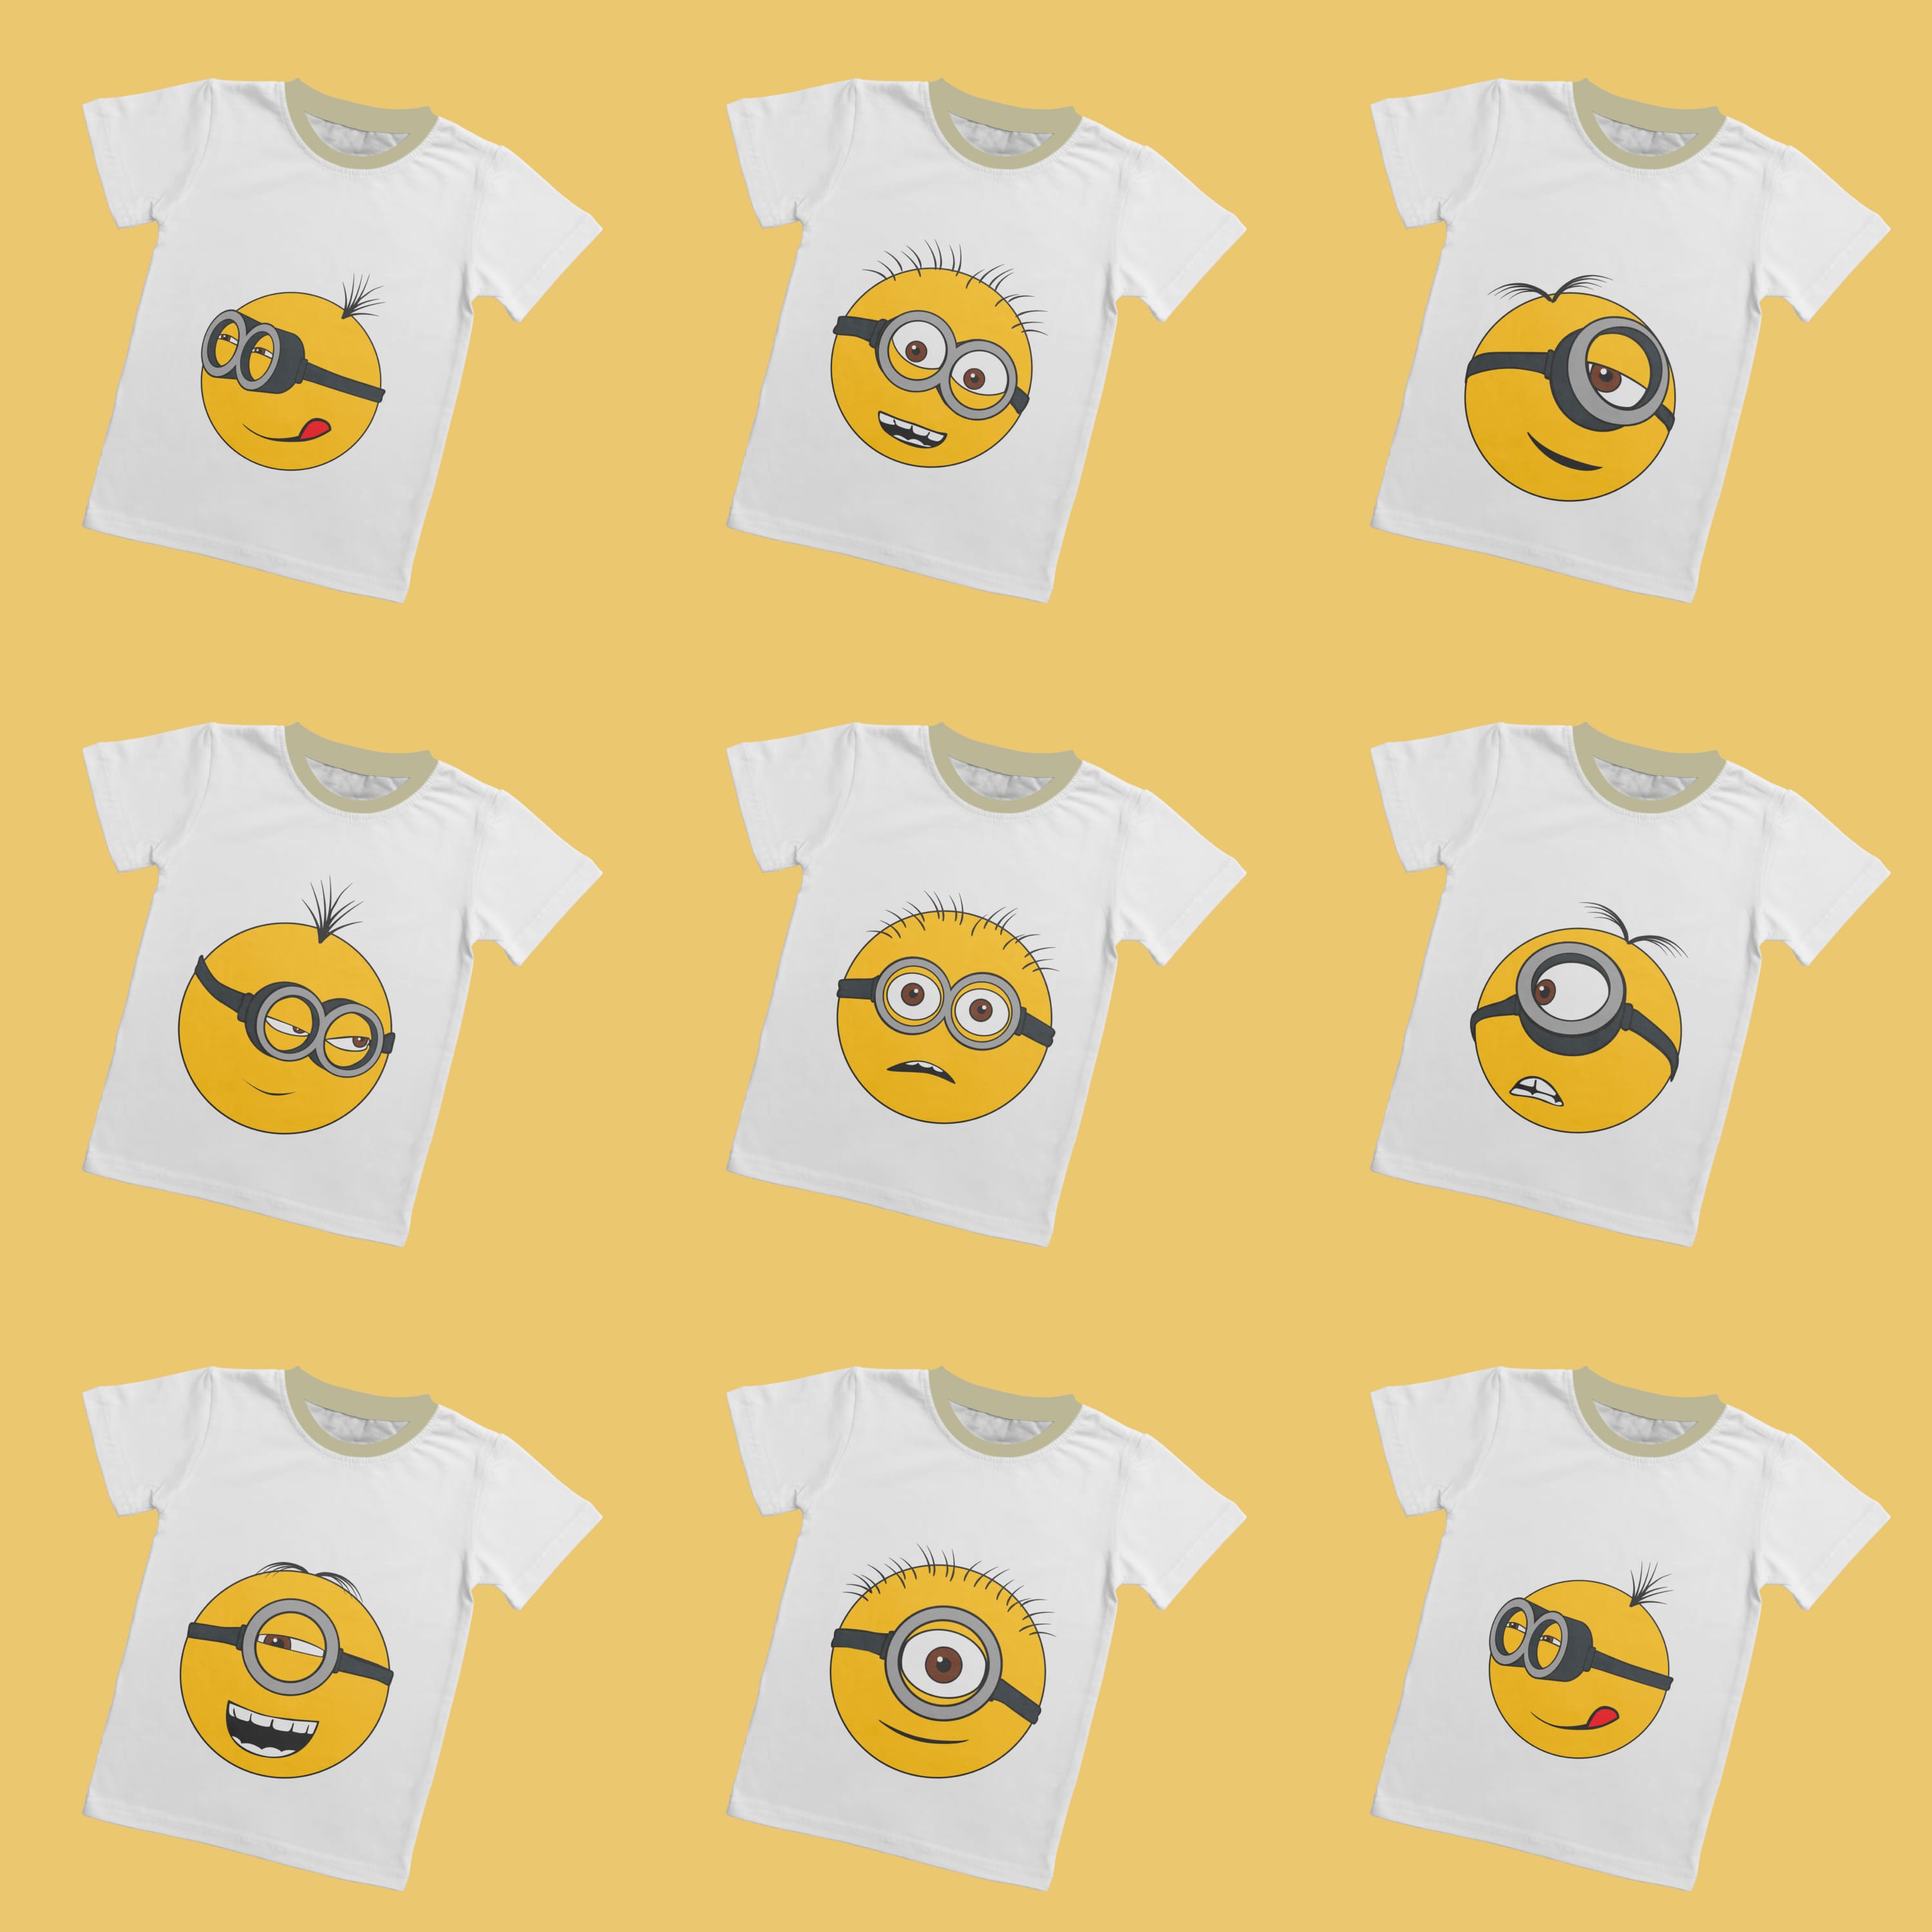 Minion Smile T-shirt Designs Cover.